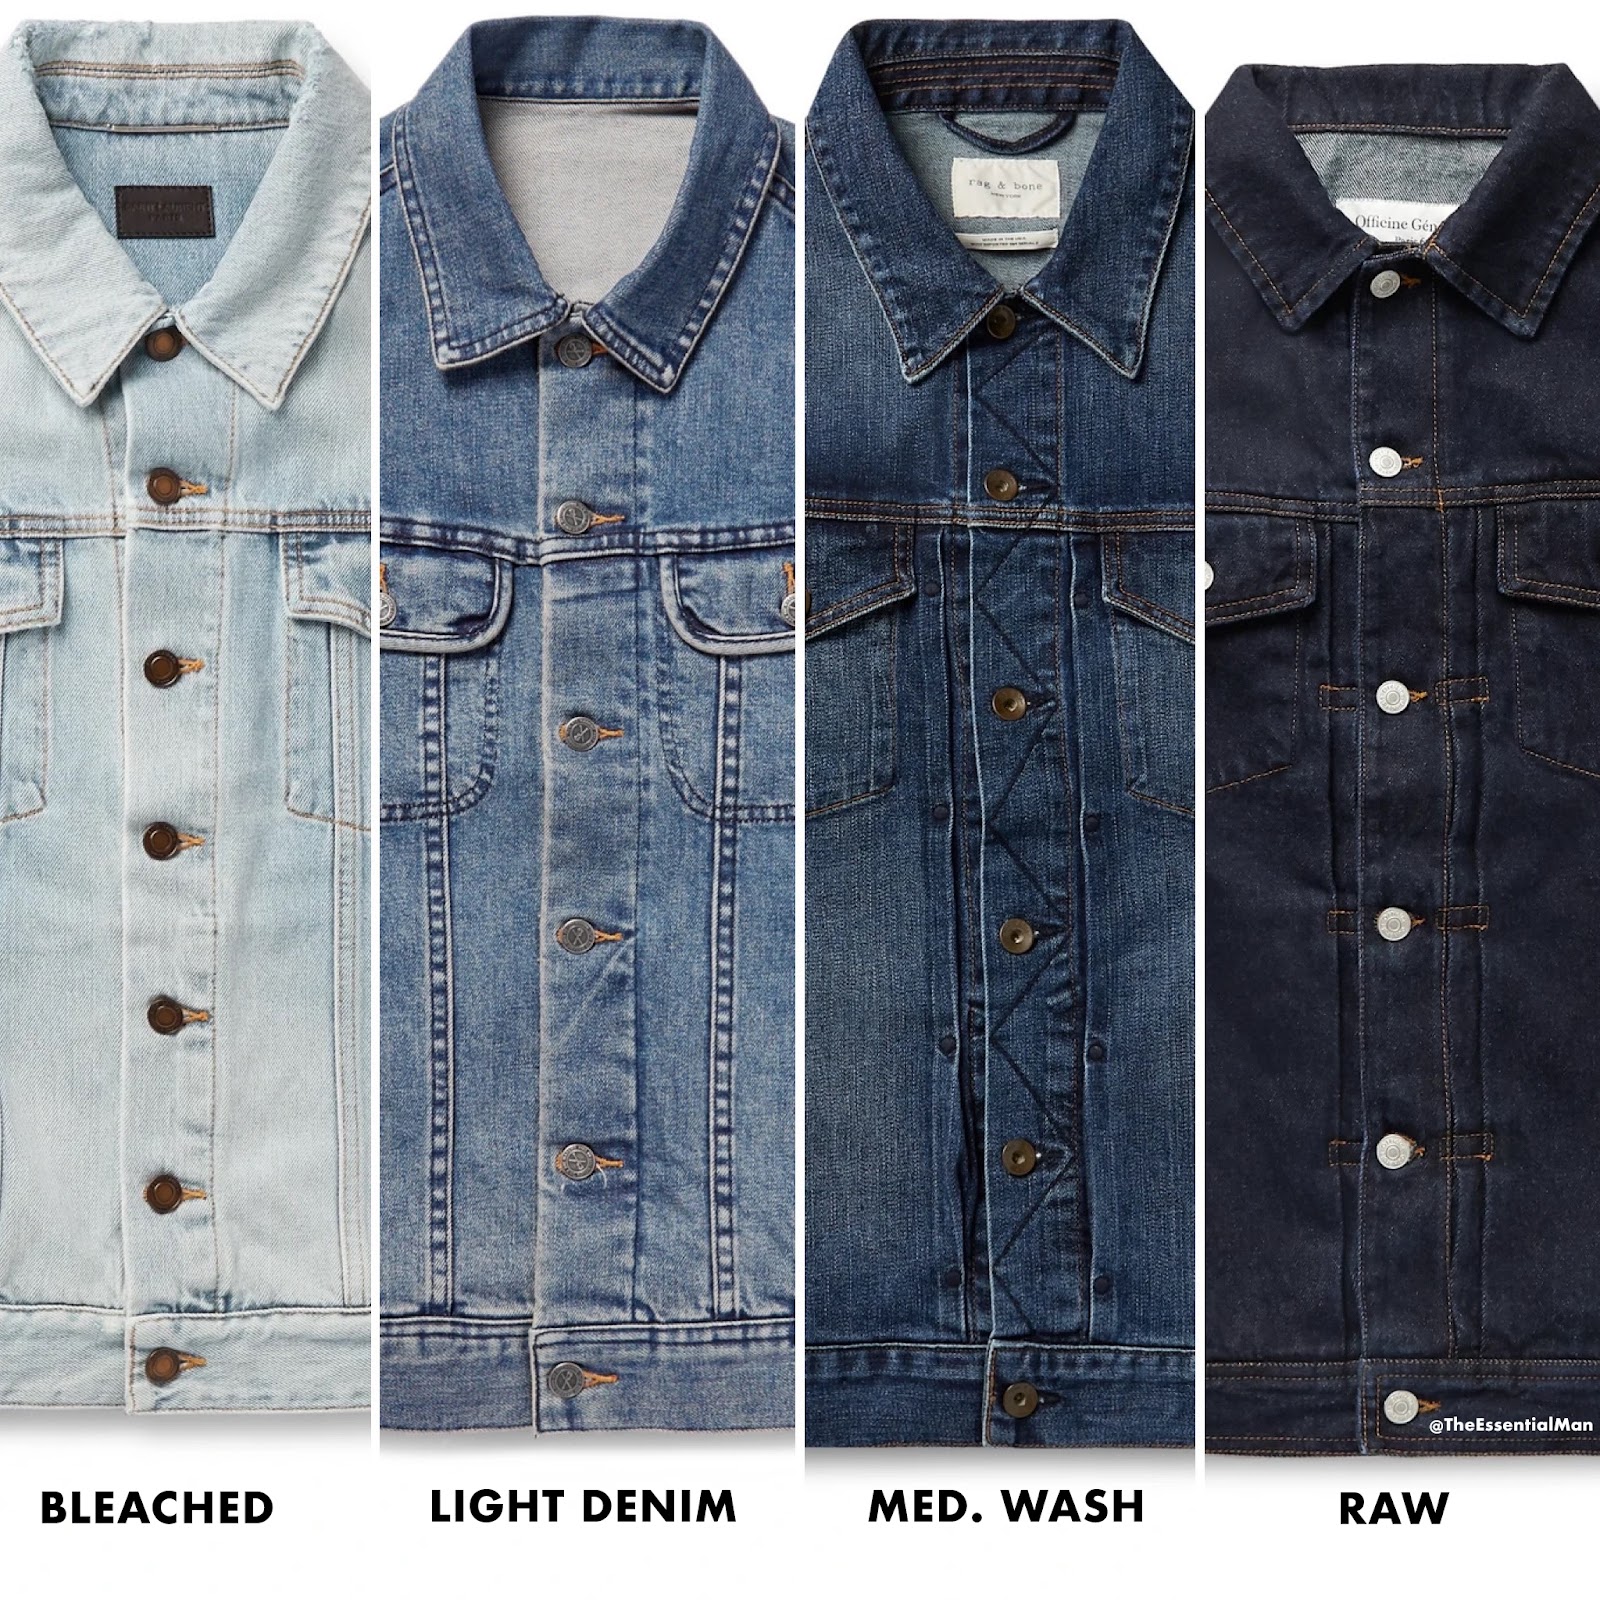 Denim Jacket Outfits for Spring + Tips for Shopping for Denim Jackets